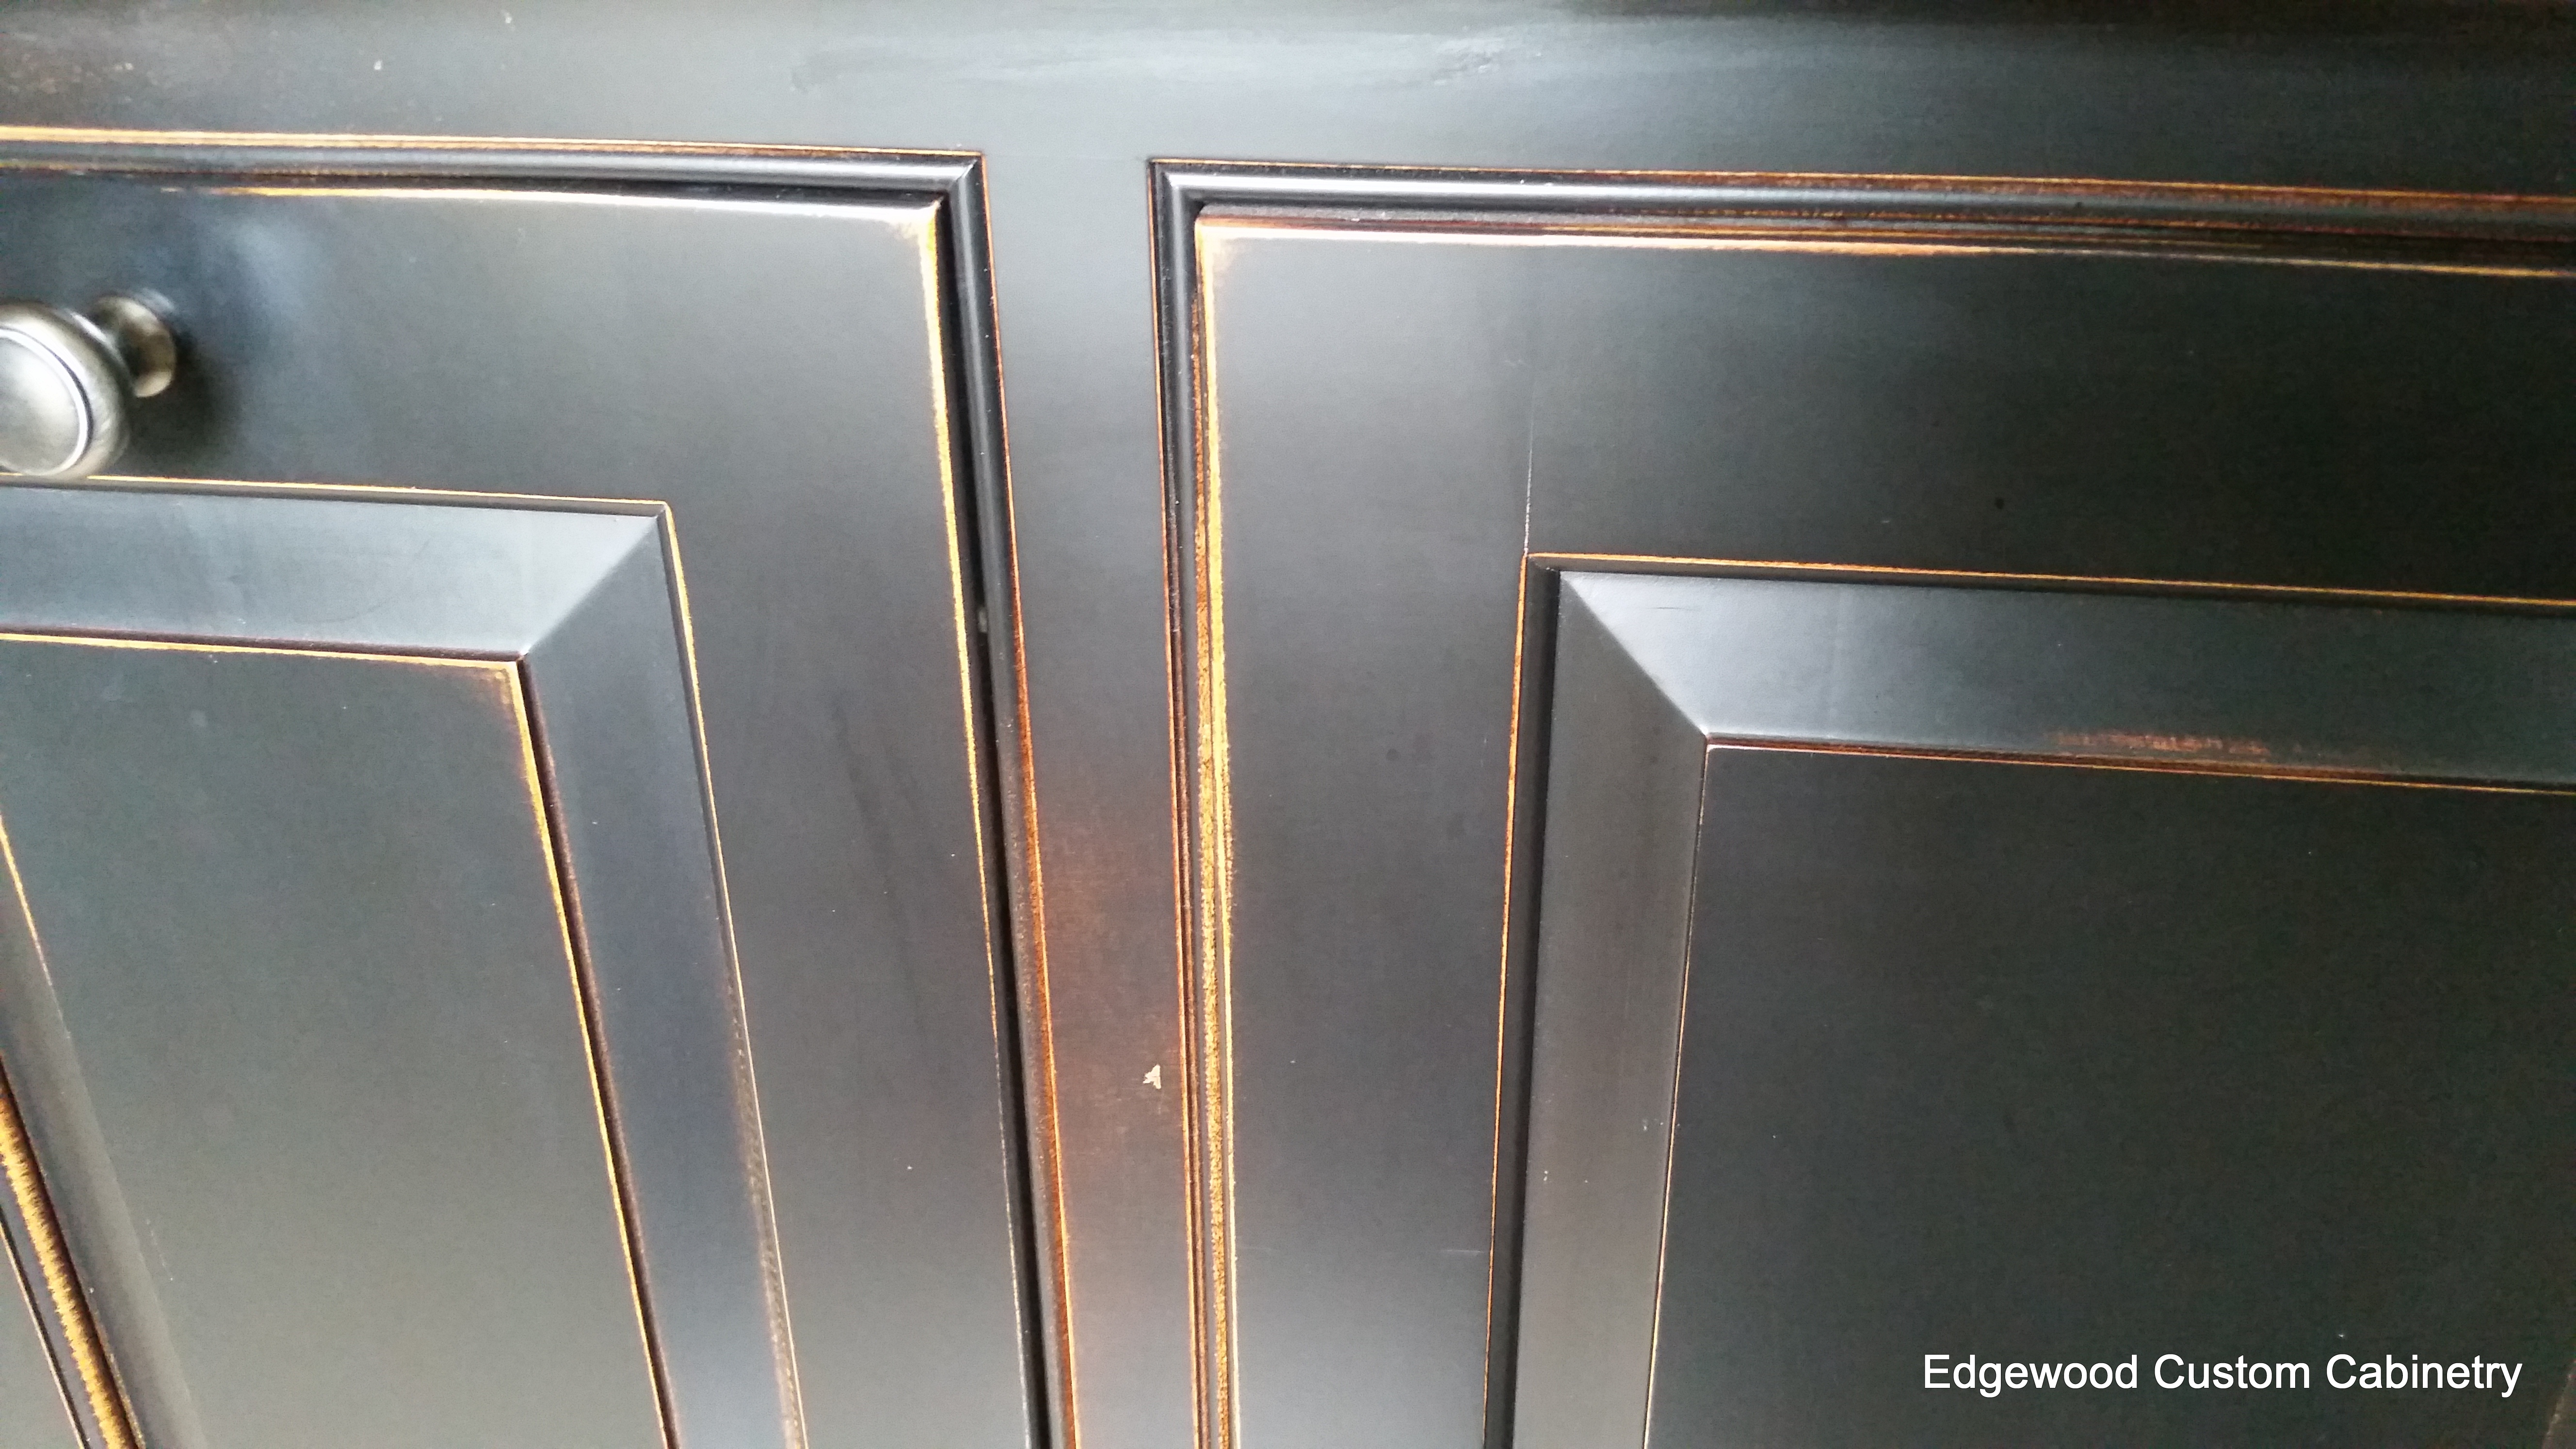 Inset Vs Overlay Cabinet Door Style Edgewood Cabinetry